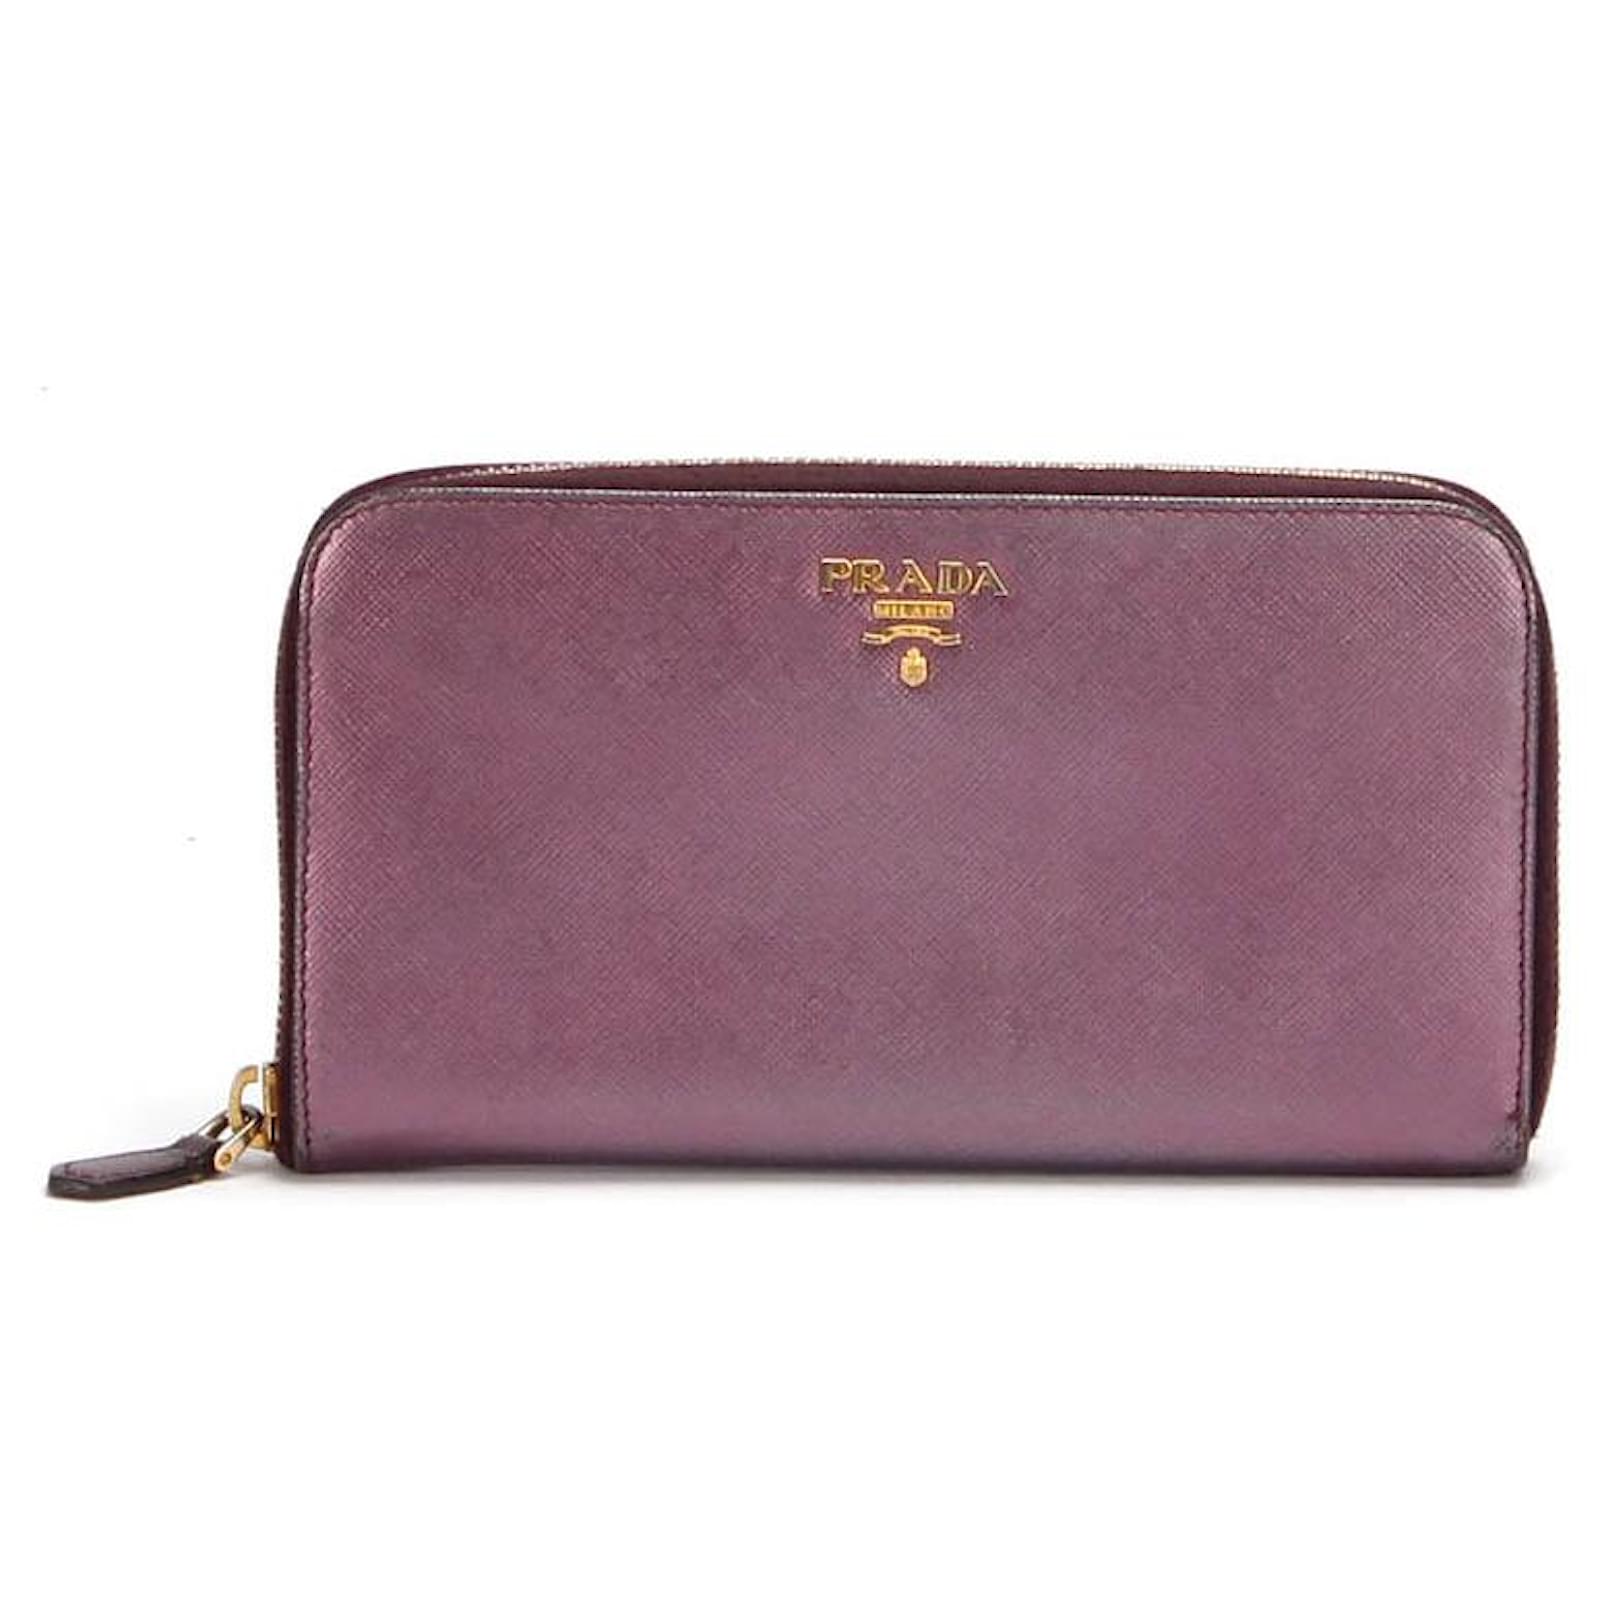 Prada | Bags | Prada Large Saffiano Tote In Purple | Poshmark